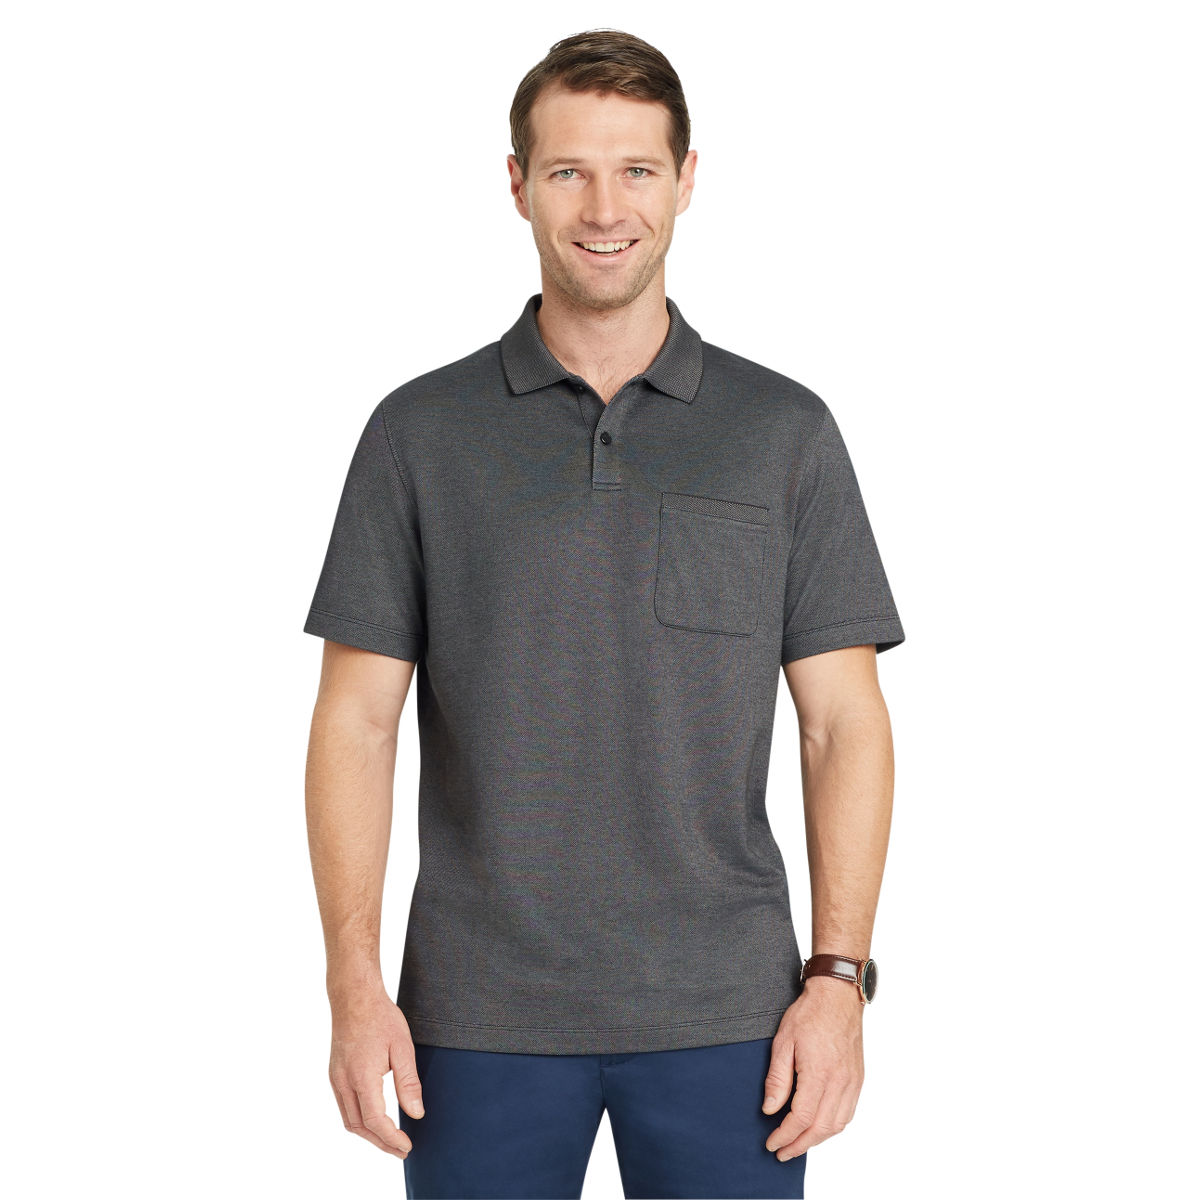 Van Heusen Men's Flex Solid Tip Short-Sleeve Polo Shirt - Black, L